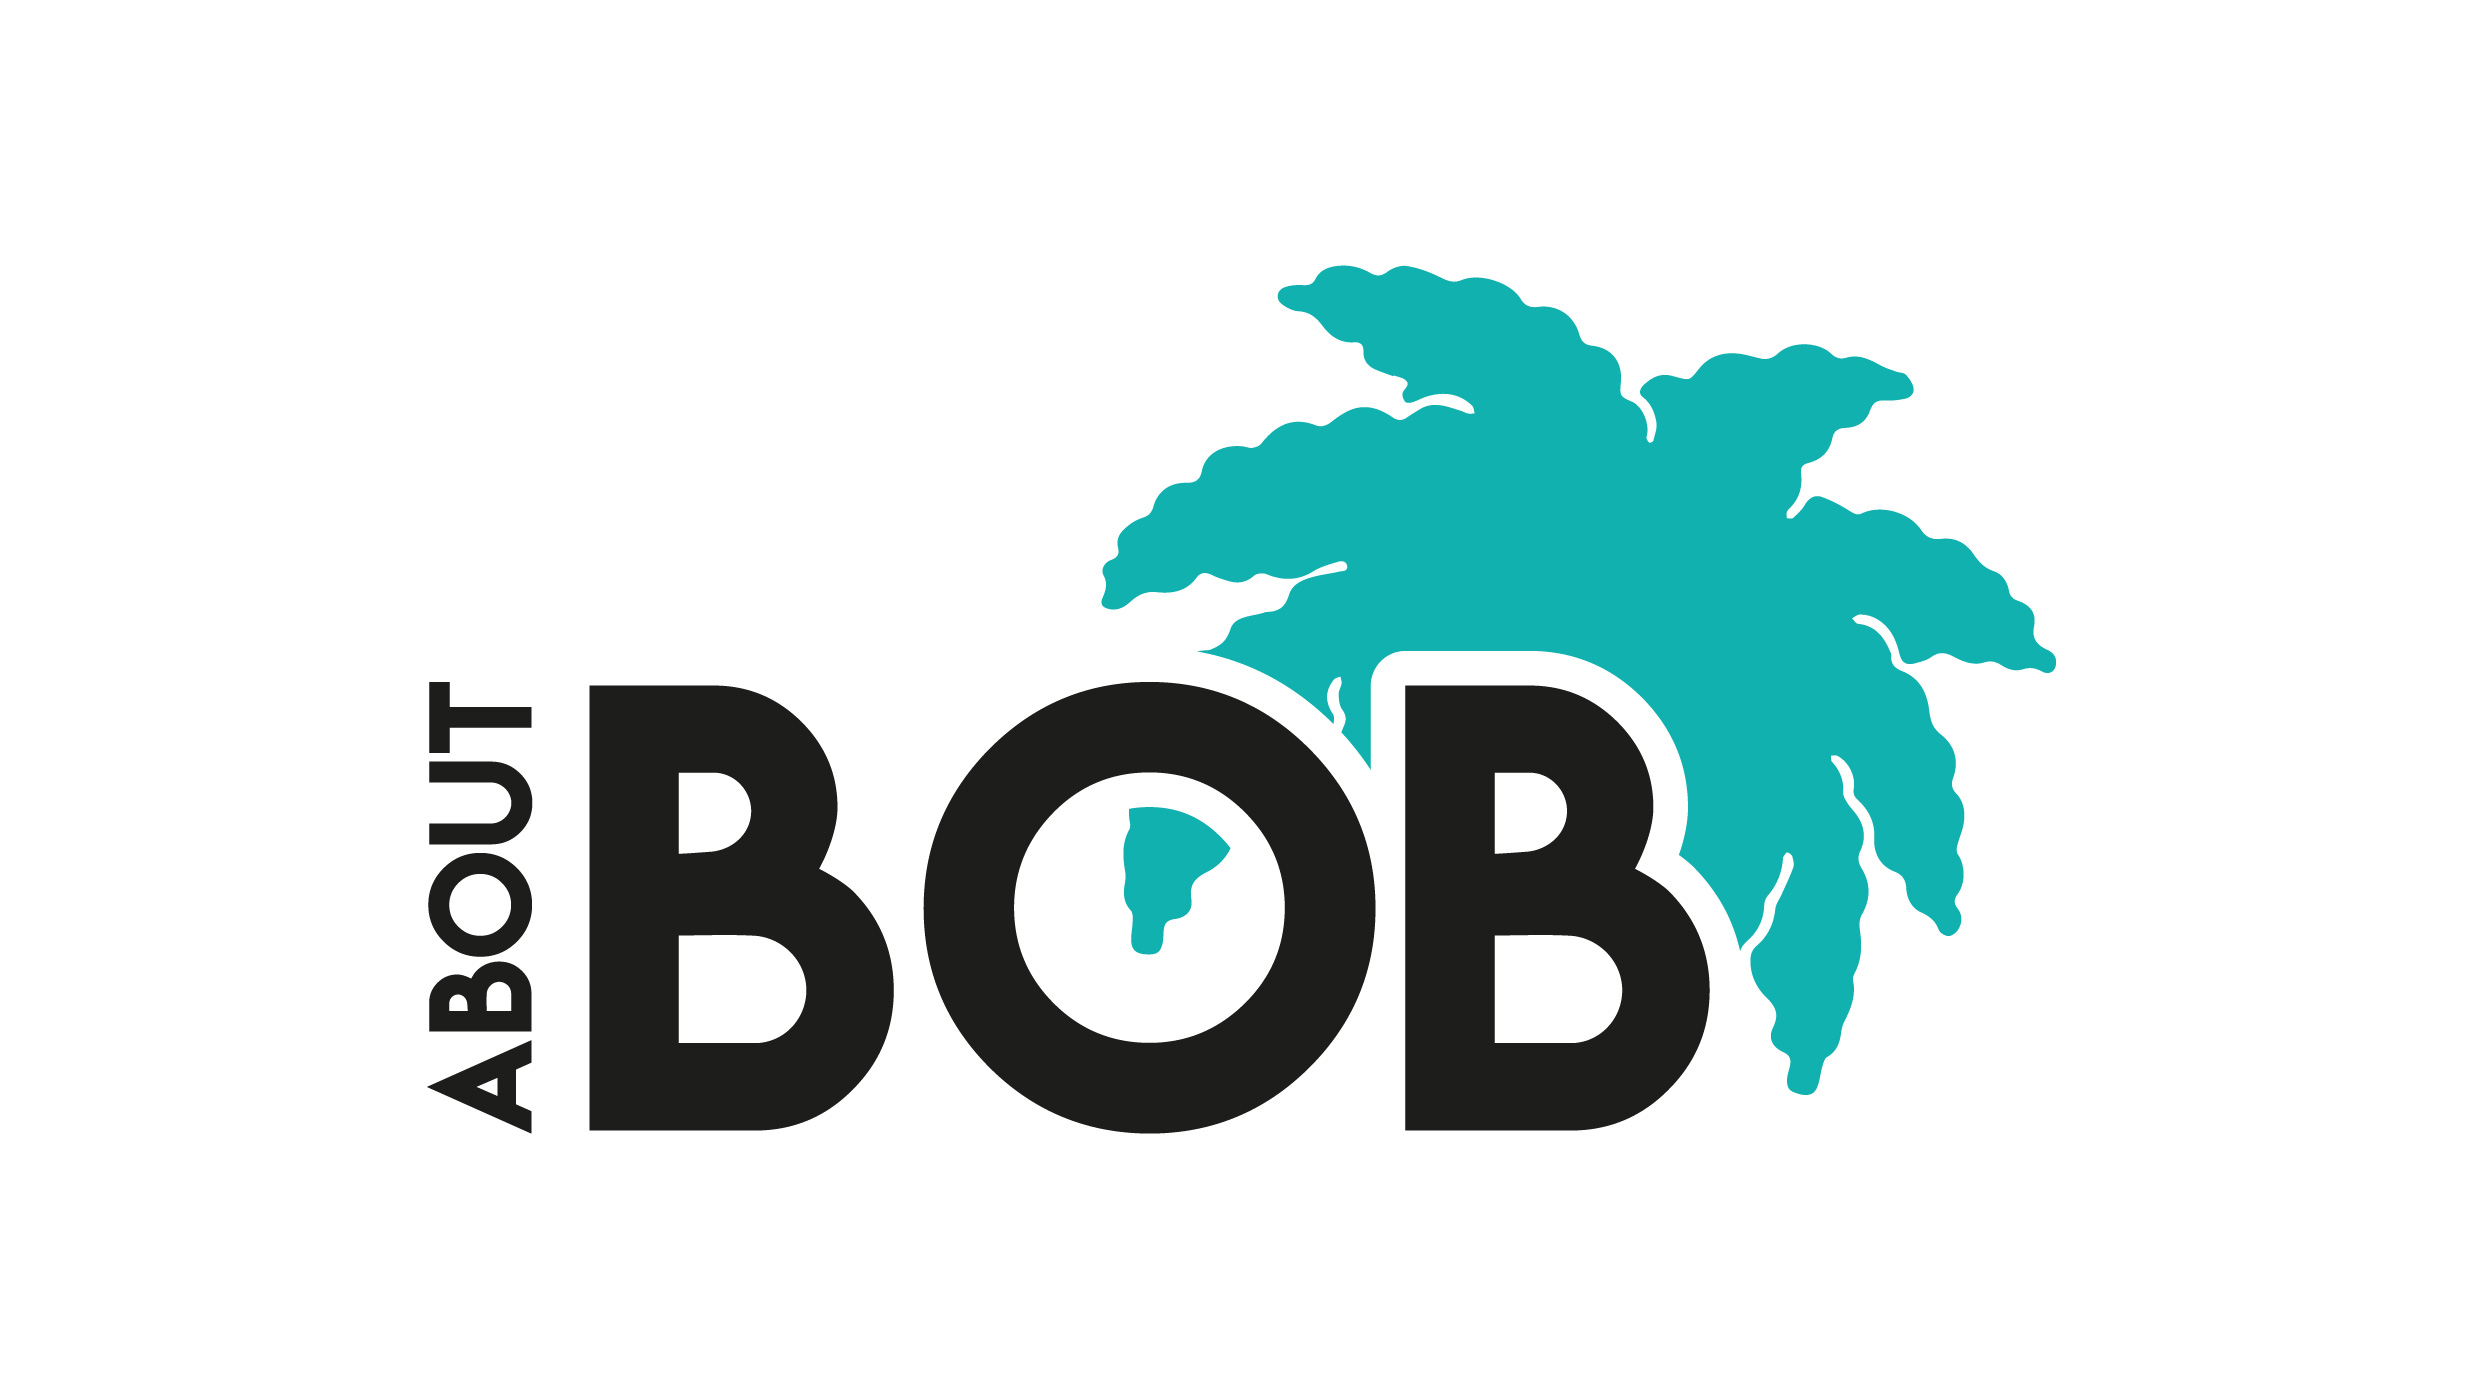 About BOB